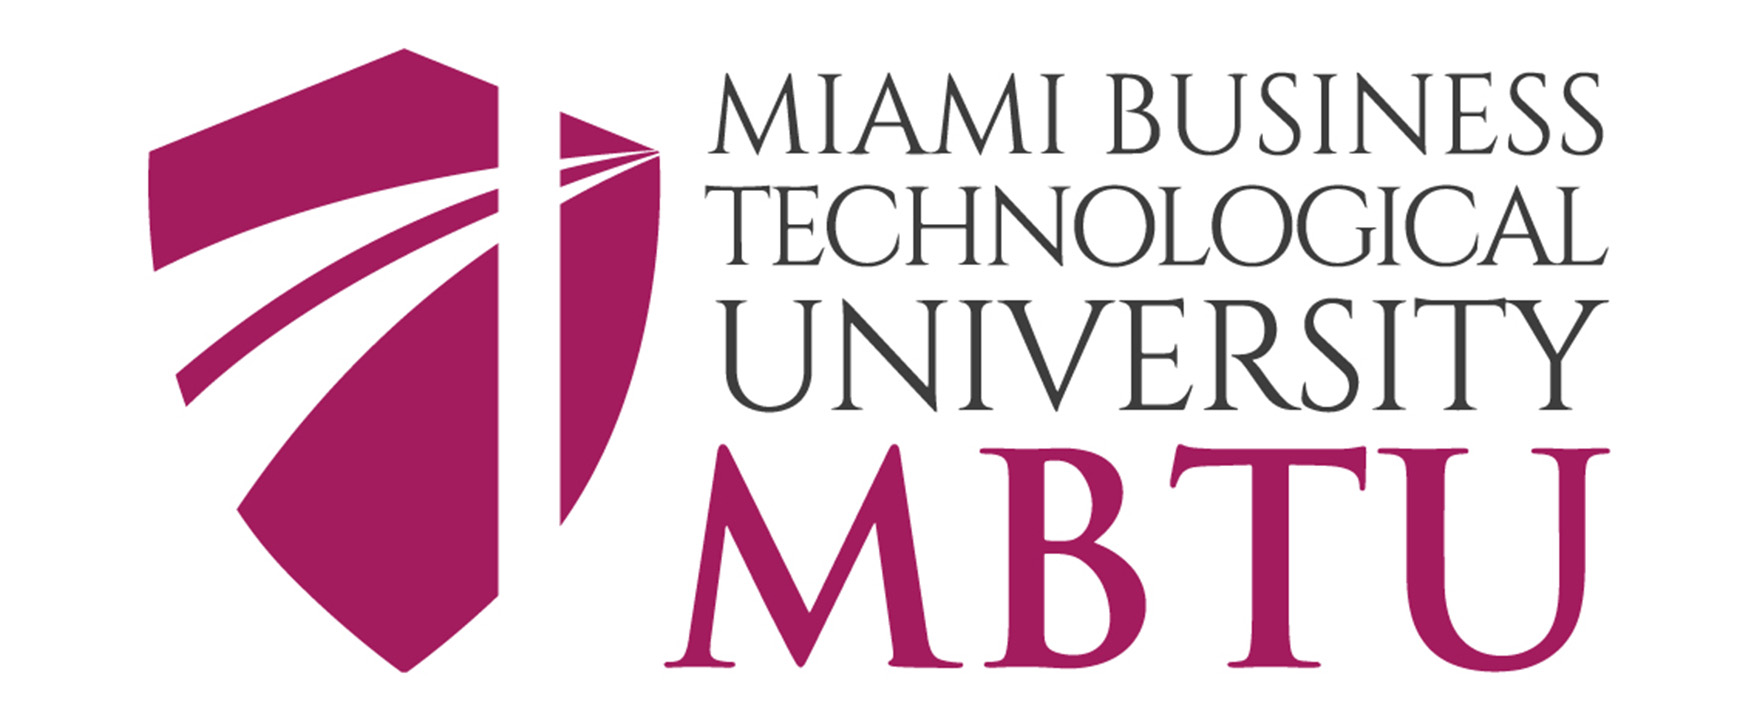 Miami Business Technological University